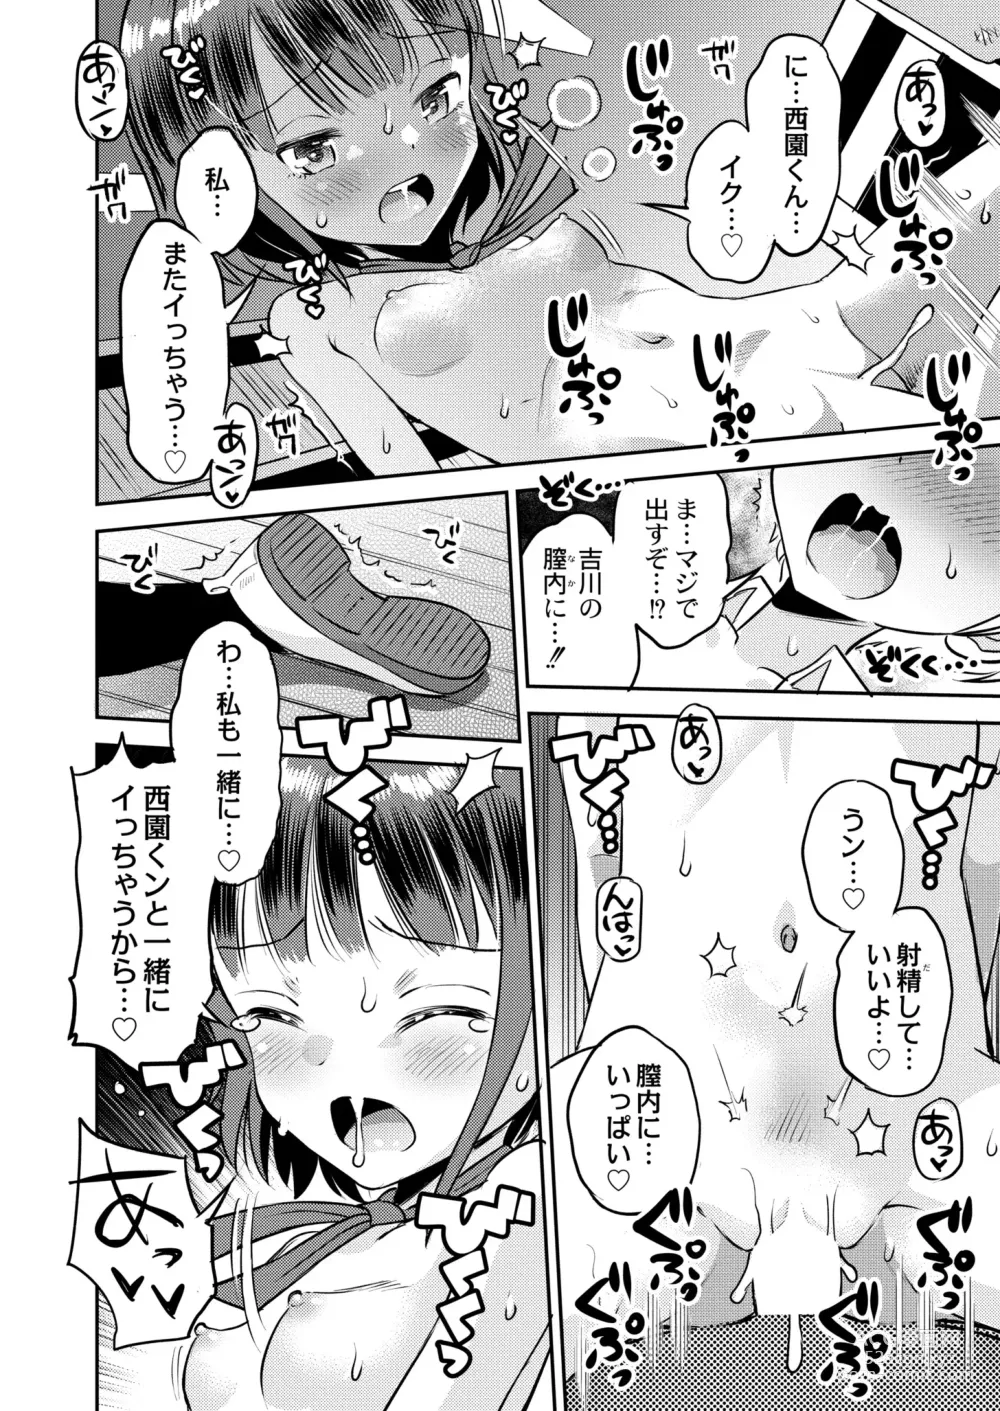 Page 432 of manga COMIC Kaien VOL.09